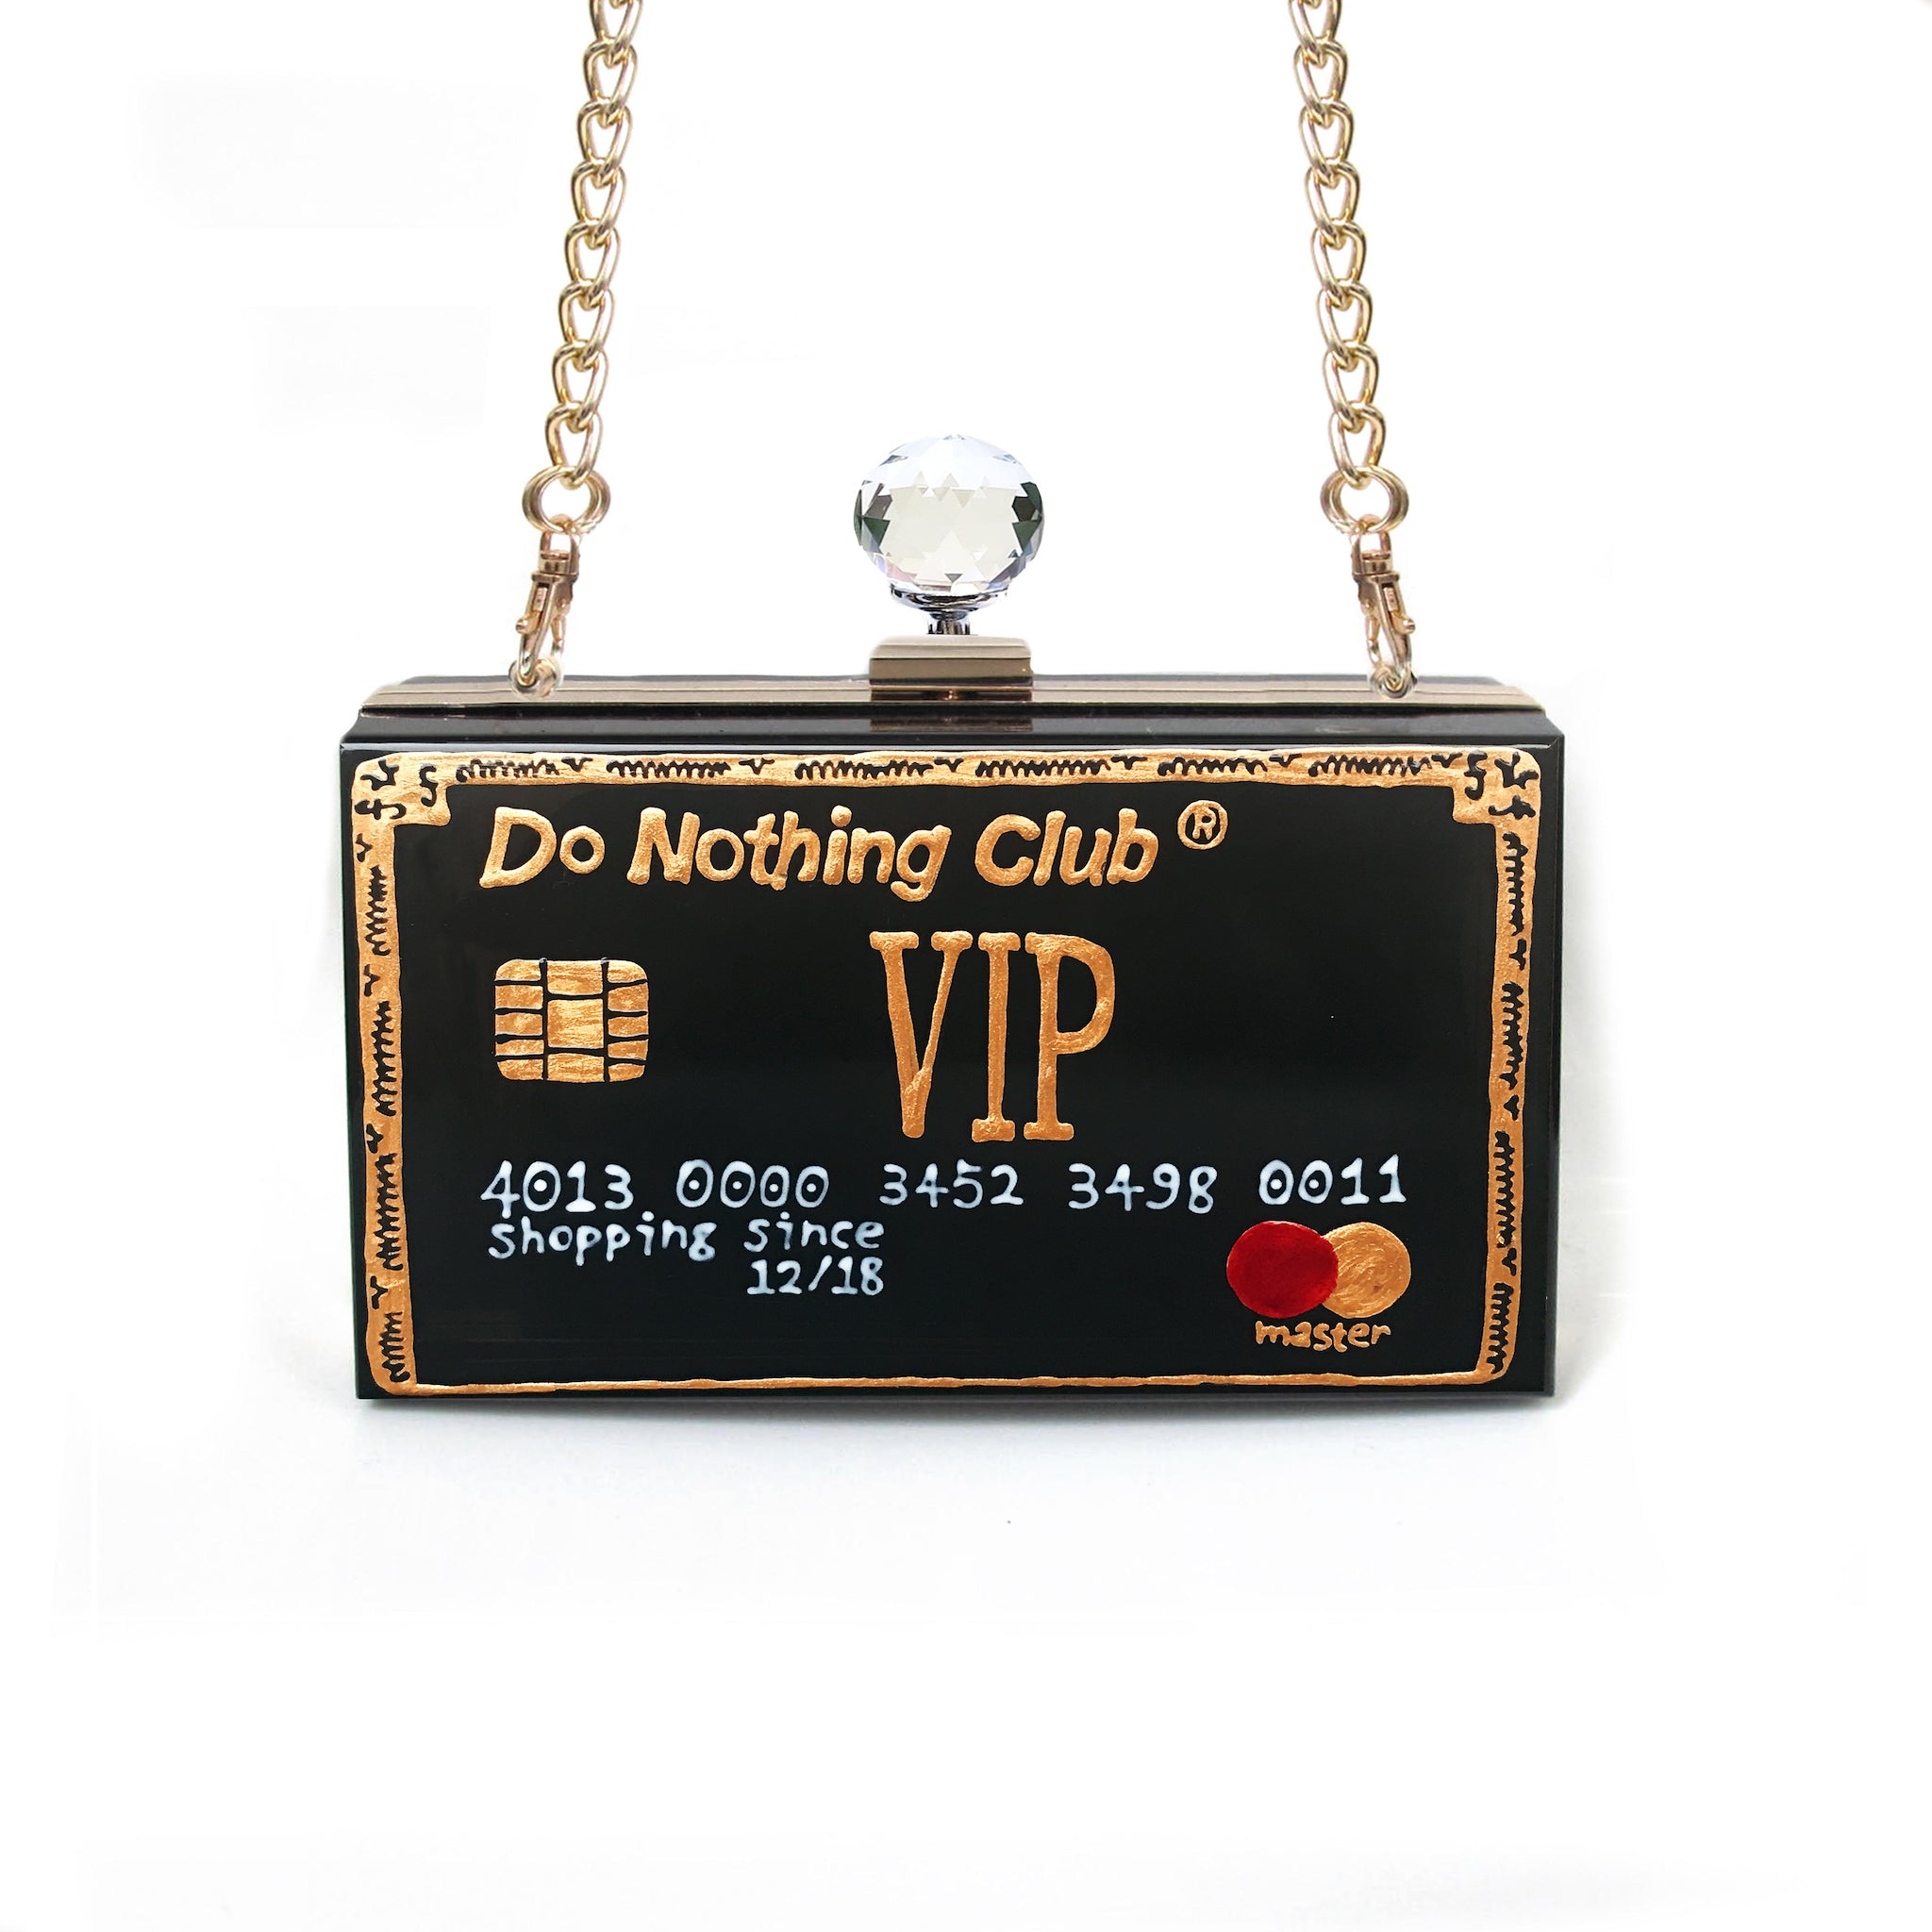 Free 212 VIP clutch!